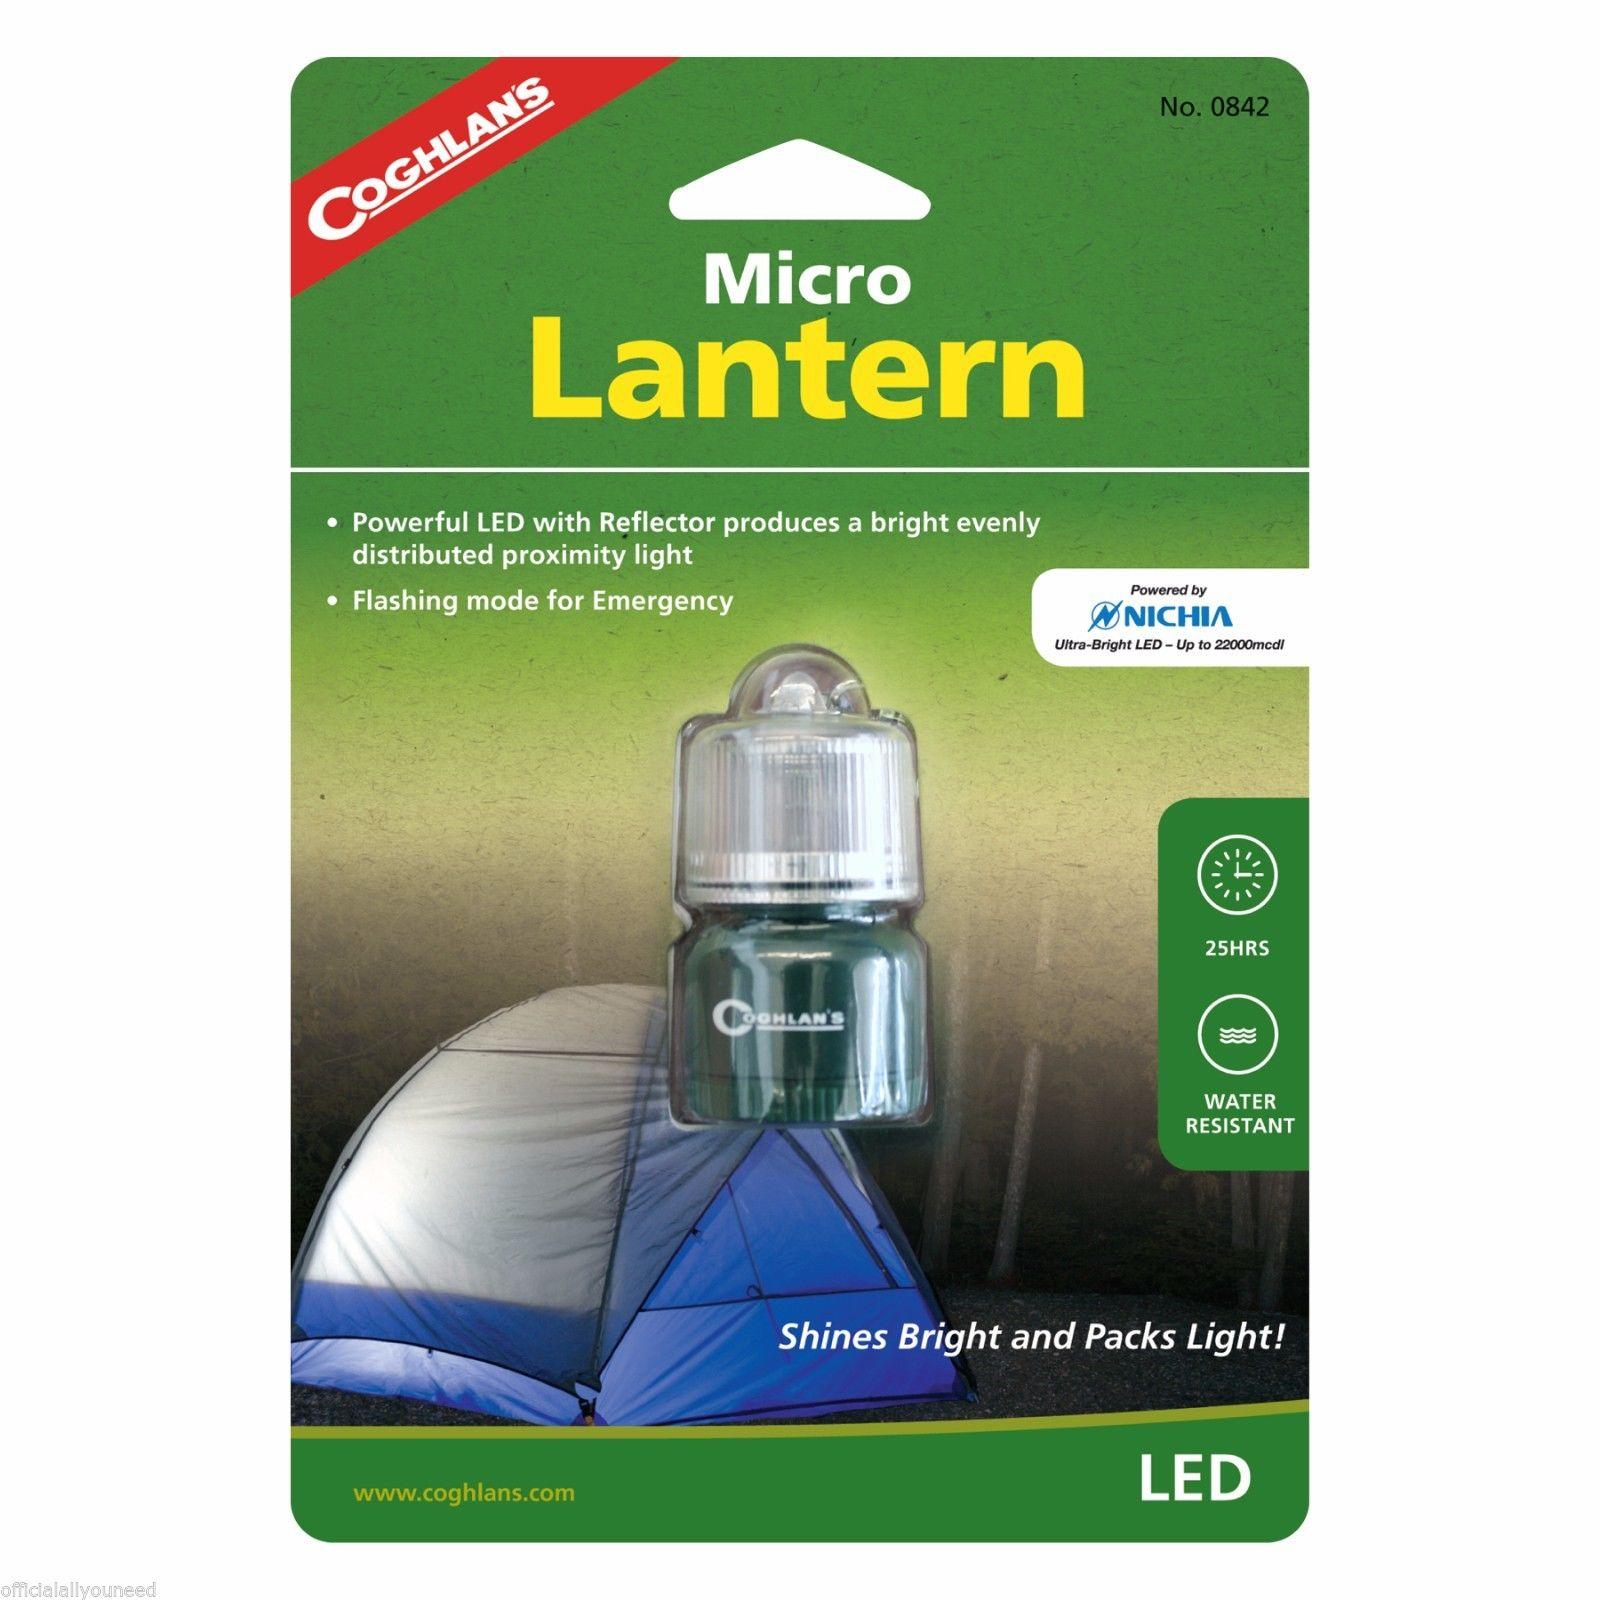 Coghlan's micro lantern